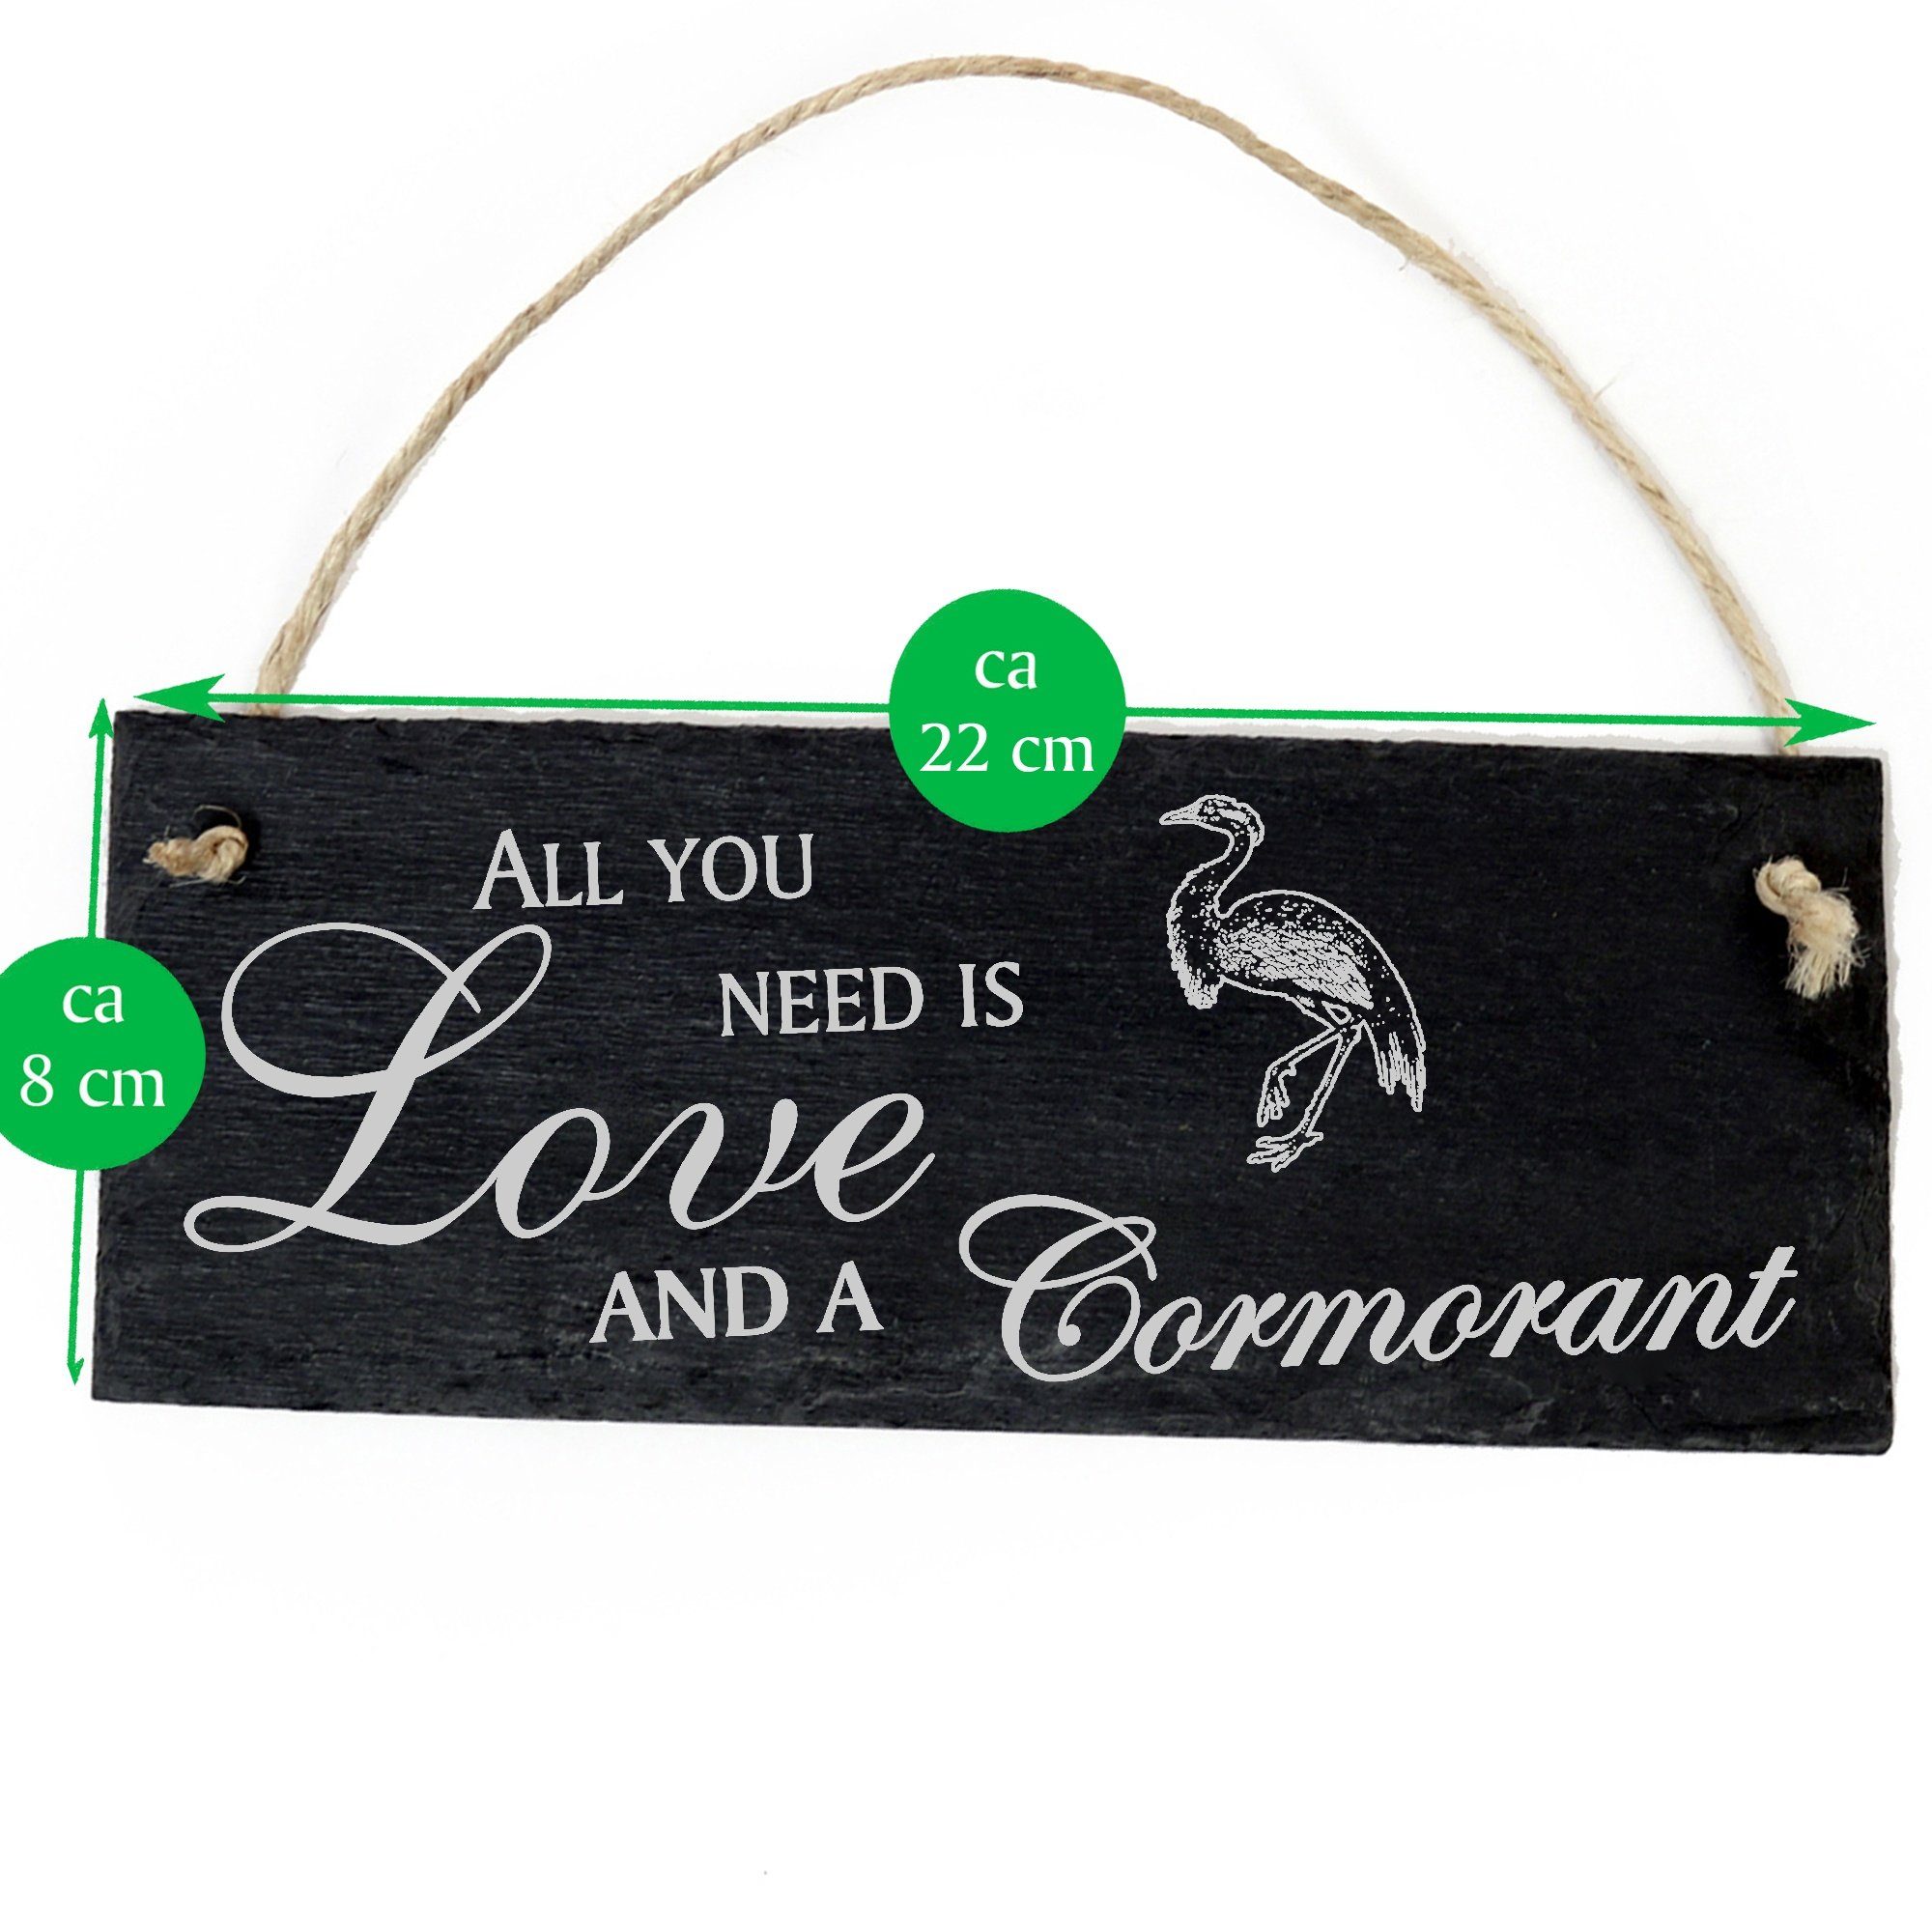 Dekolando Hängedekoration Kormoran and 22x8cm a you All Cormorant need Love is